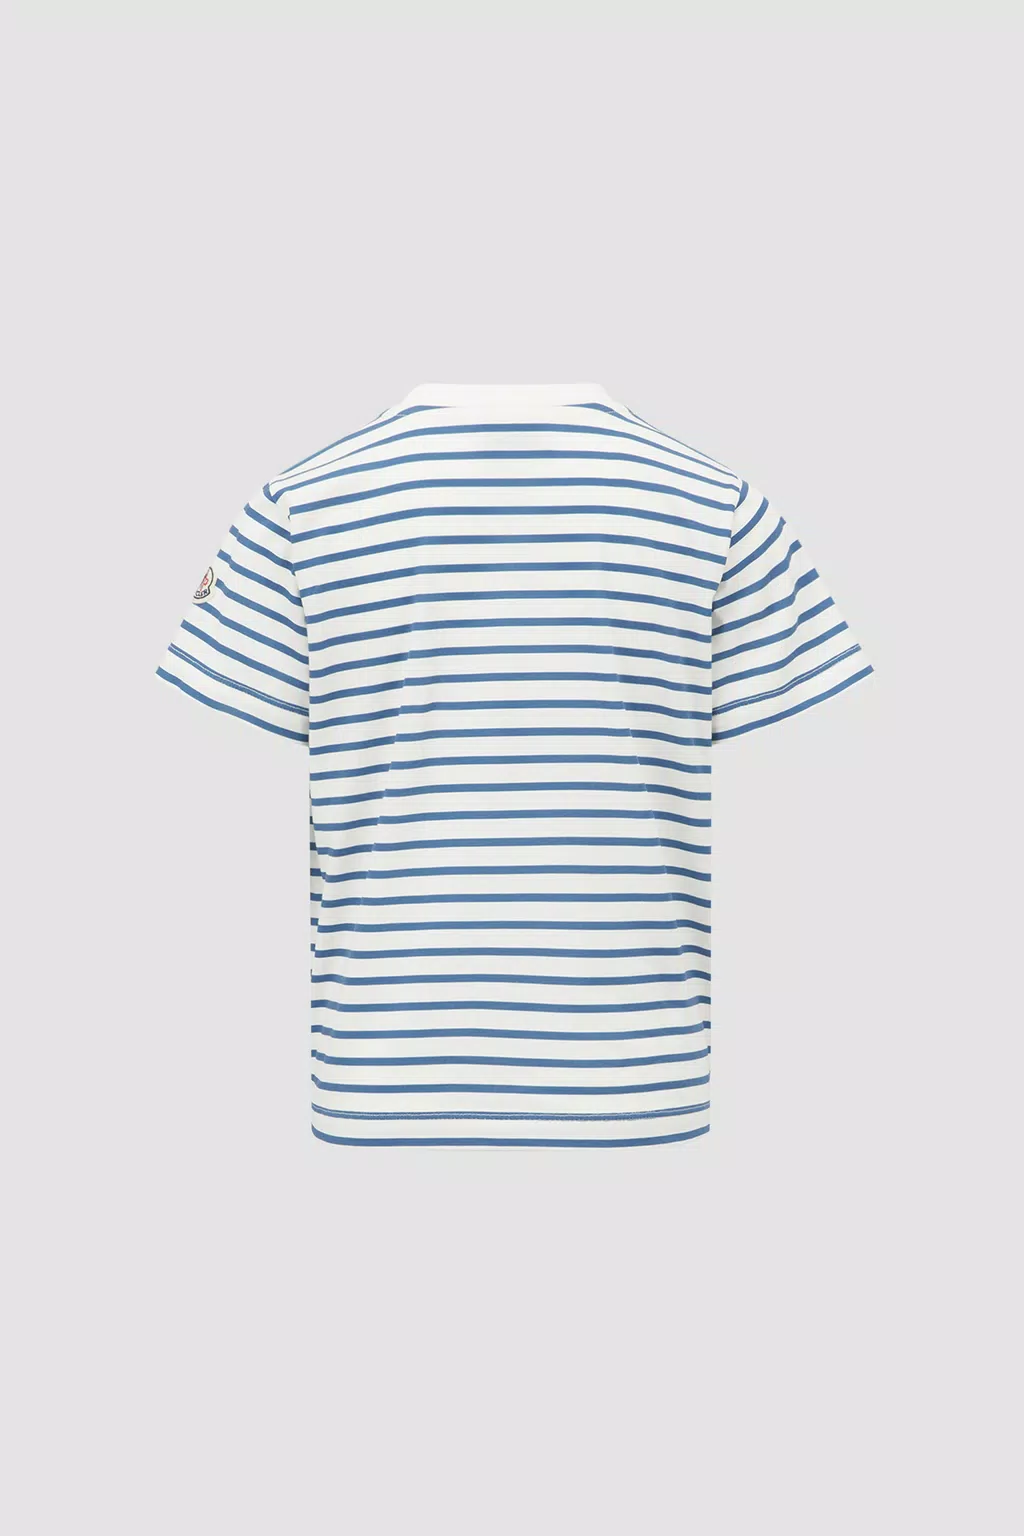 T-Shirts, Polos & Long Sleeve Shirts for Boys | Moncler US